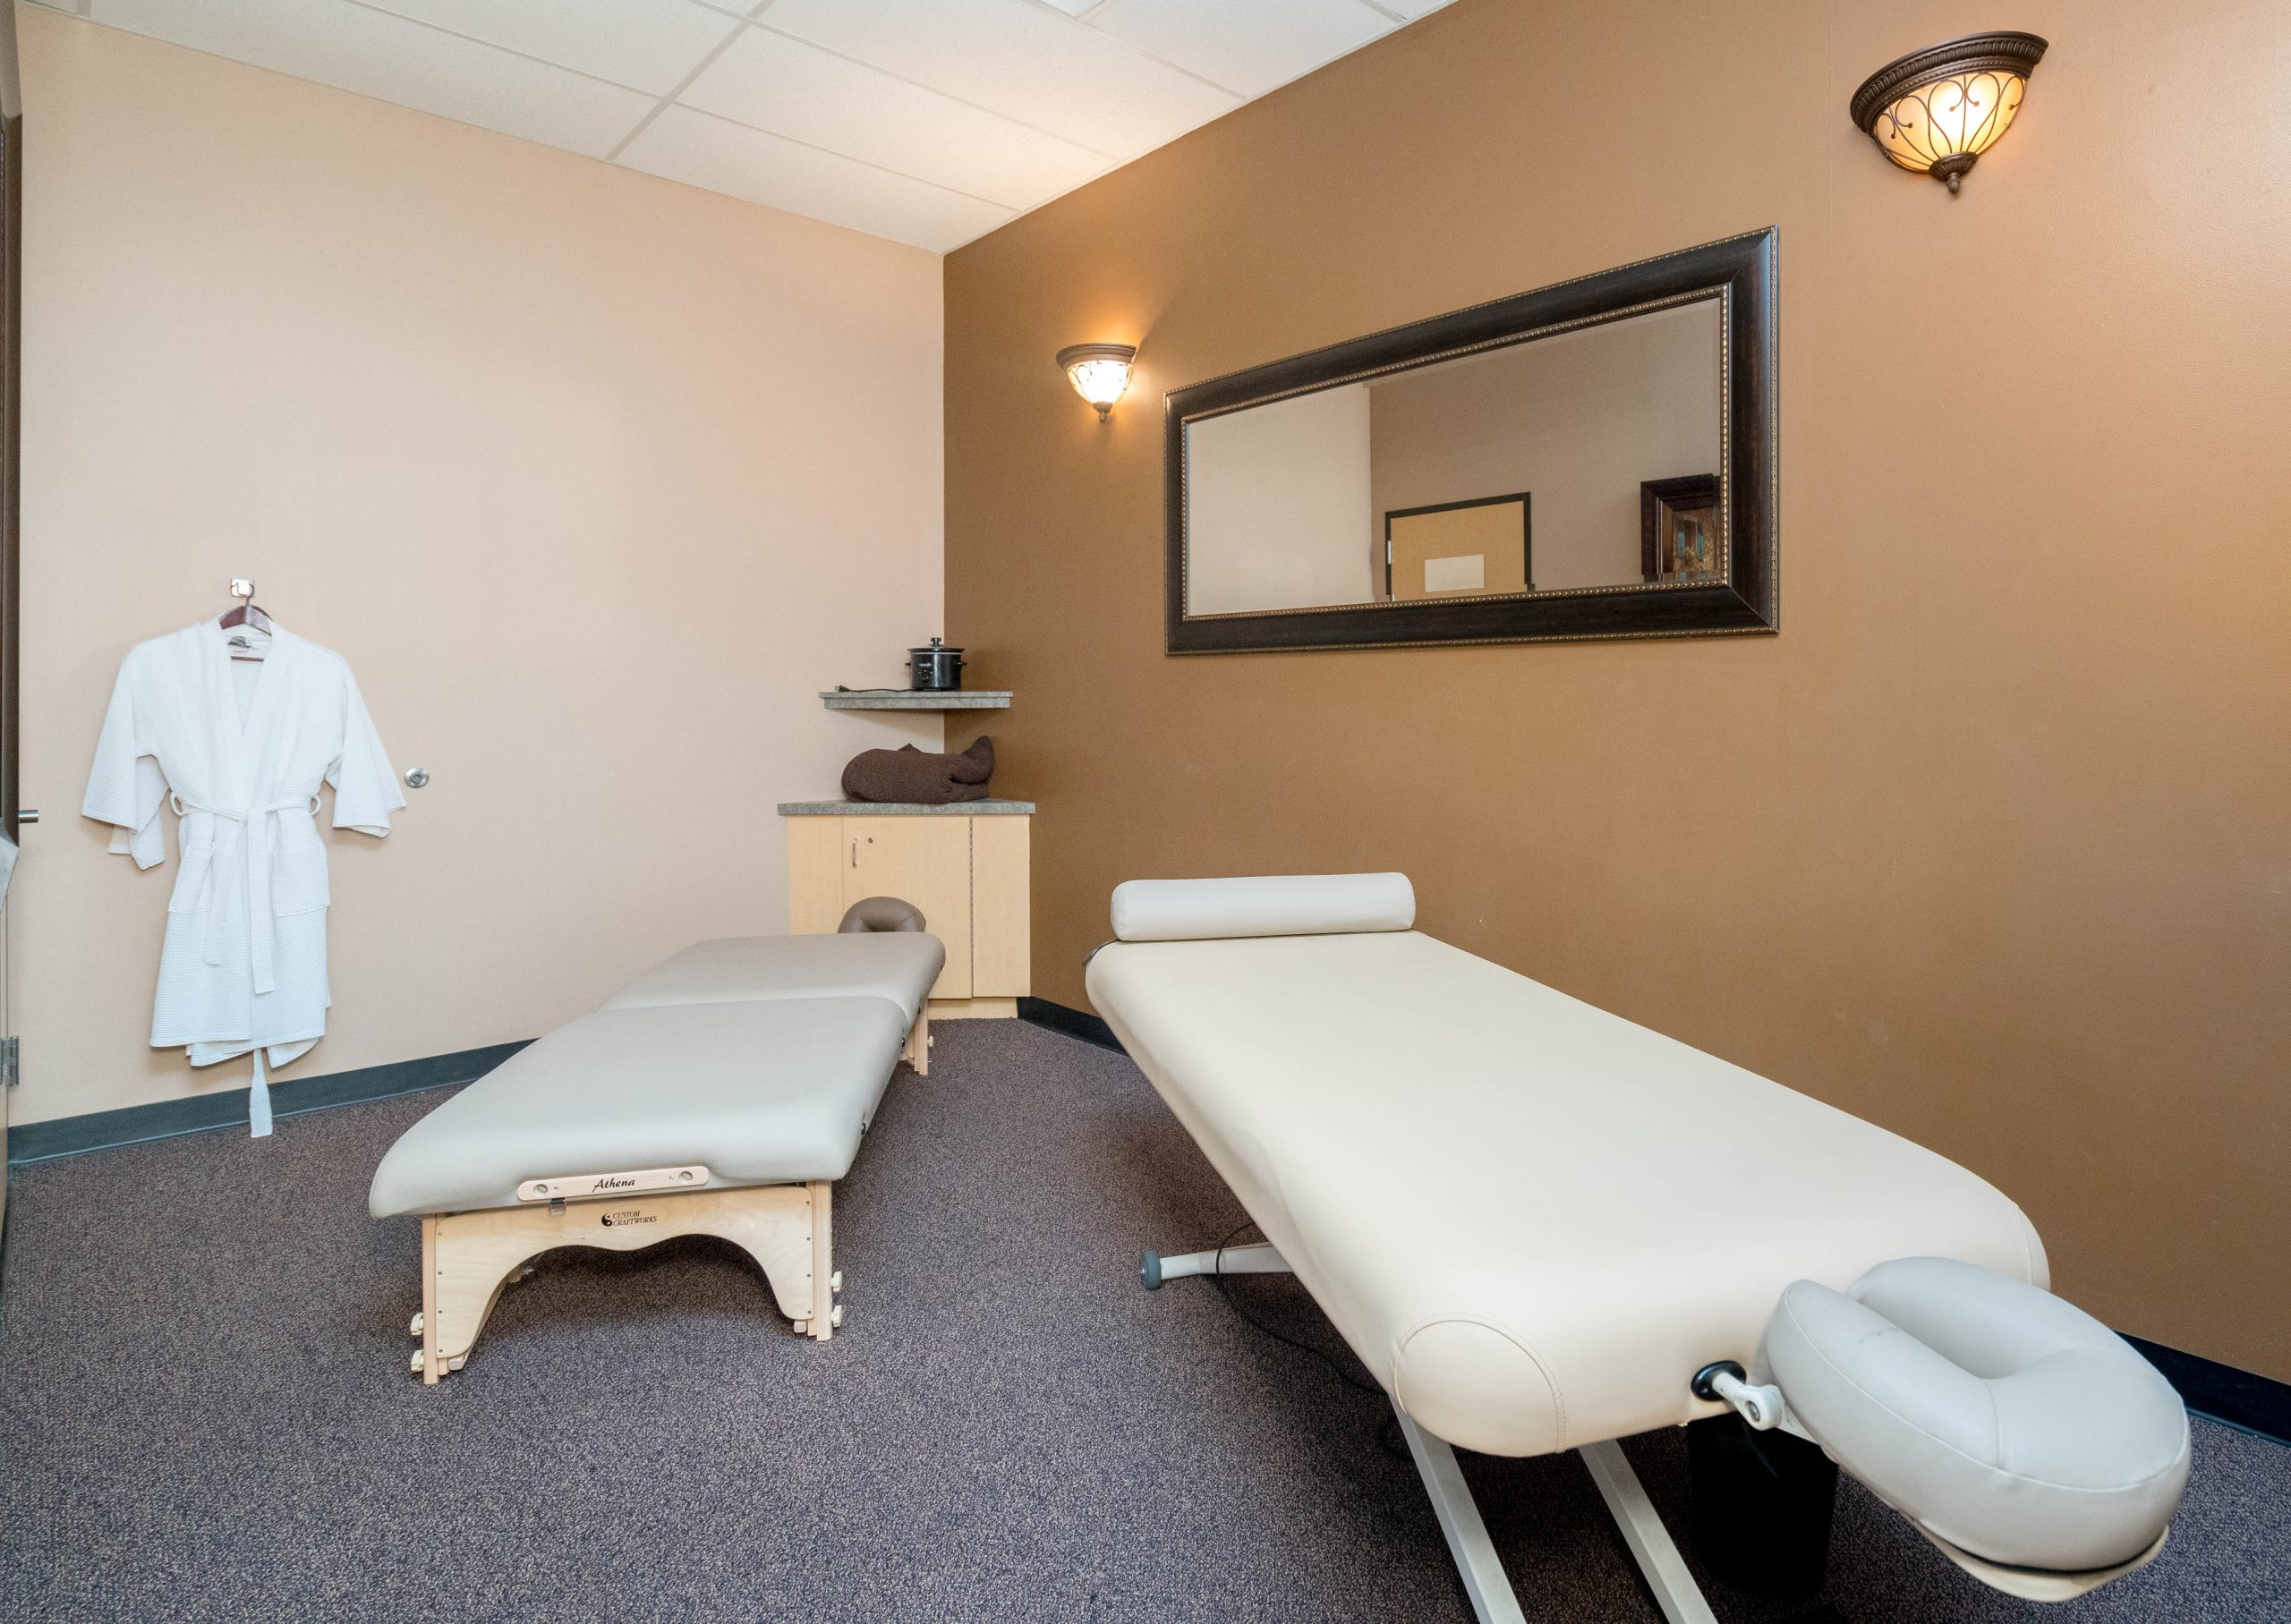 Private massage therapy room